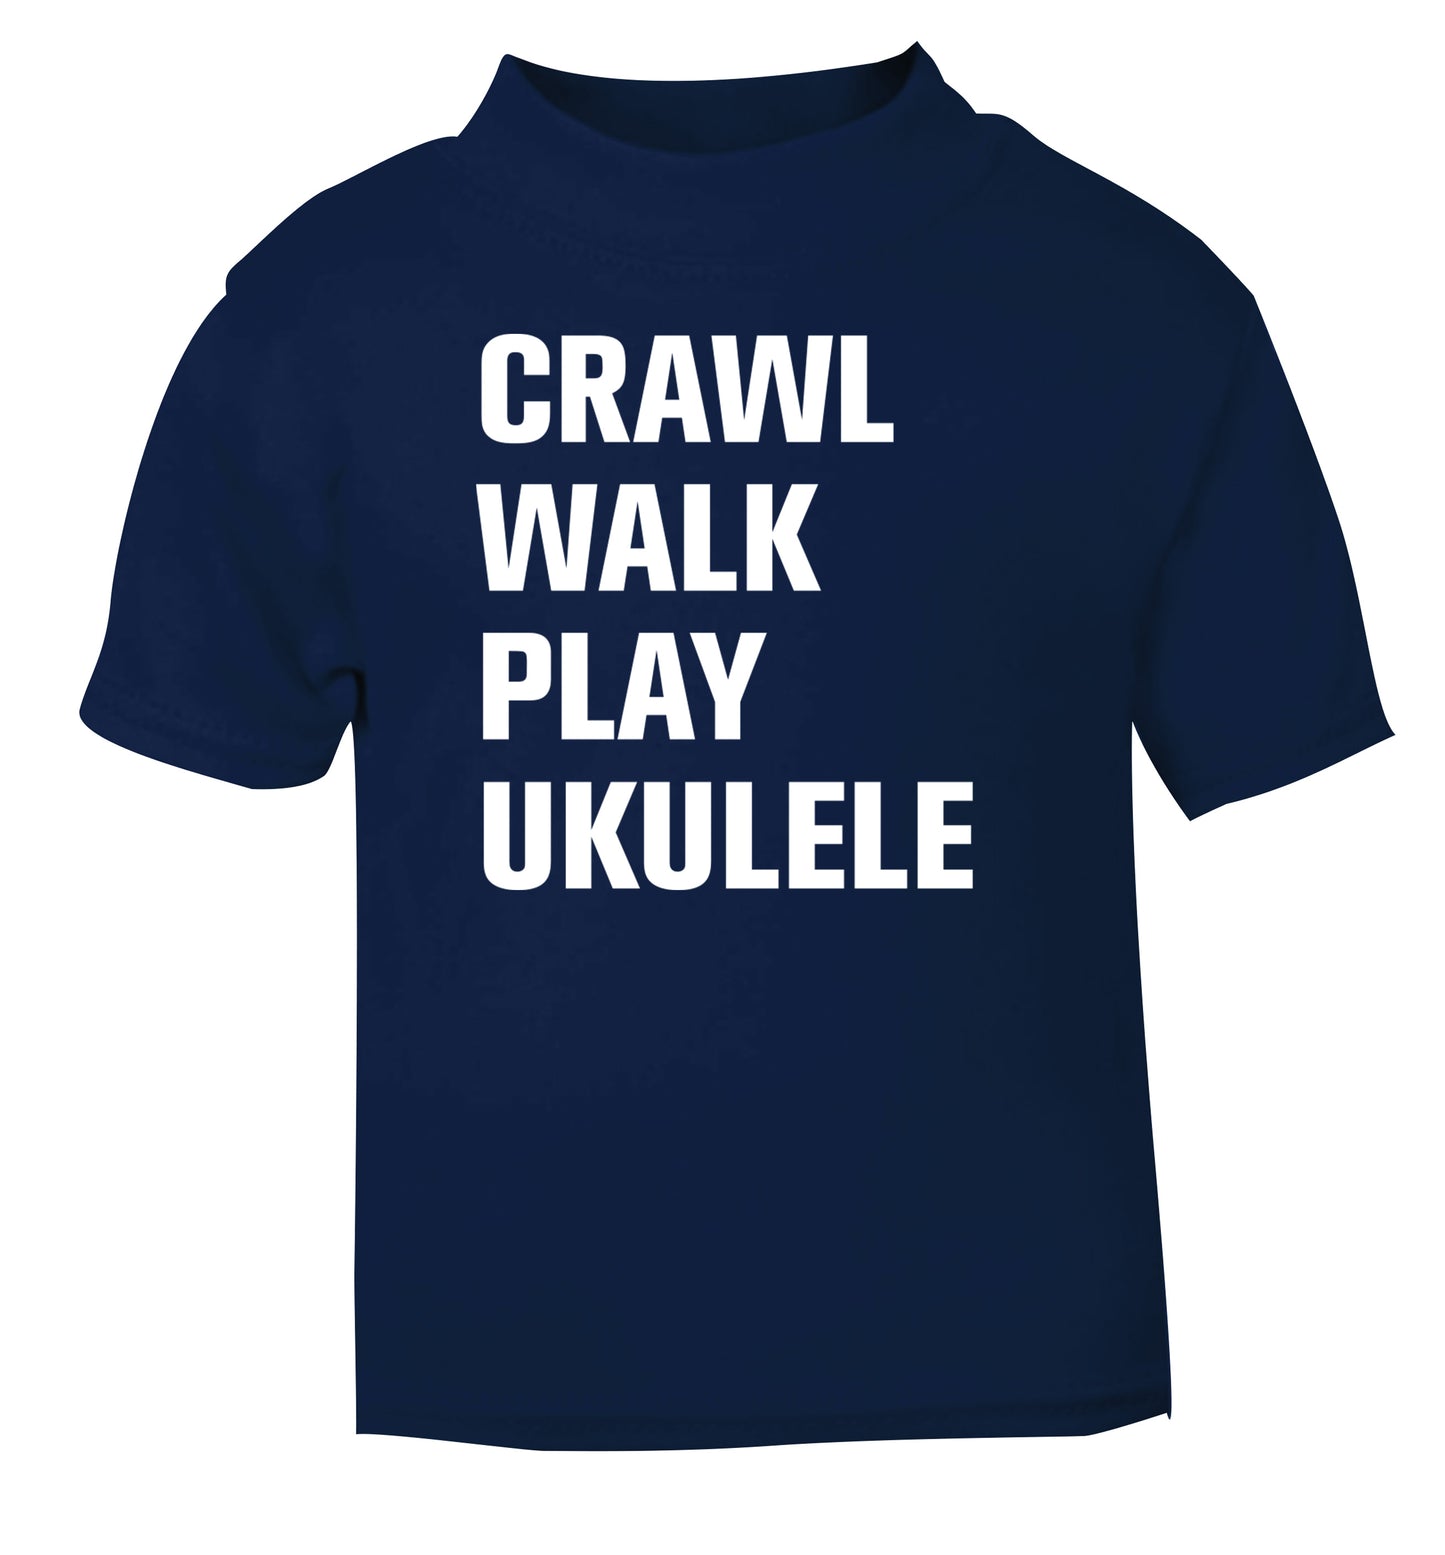 Crawl walk play ukulele navy Baby Toddler Tshirt 2 Years